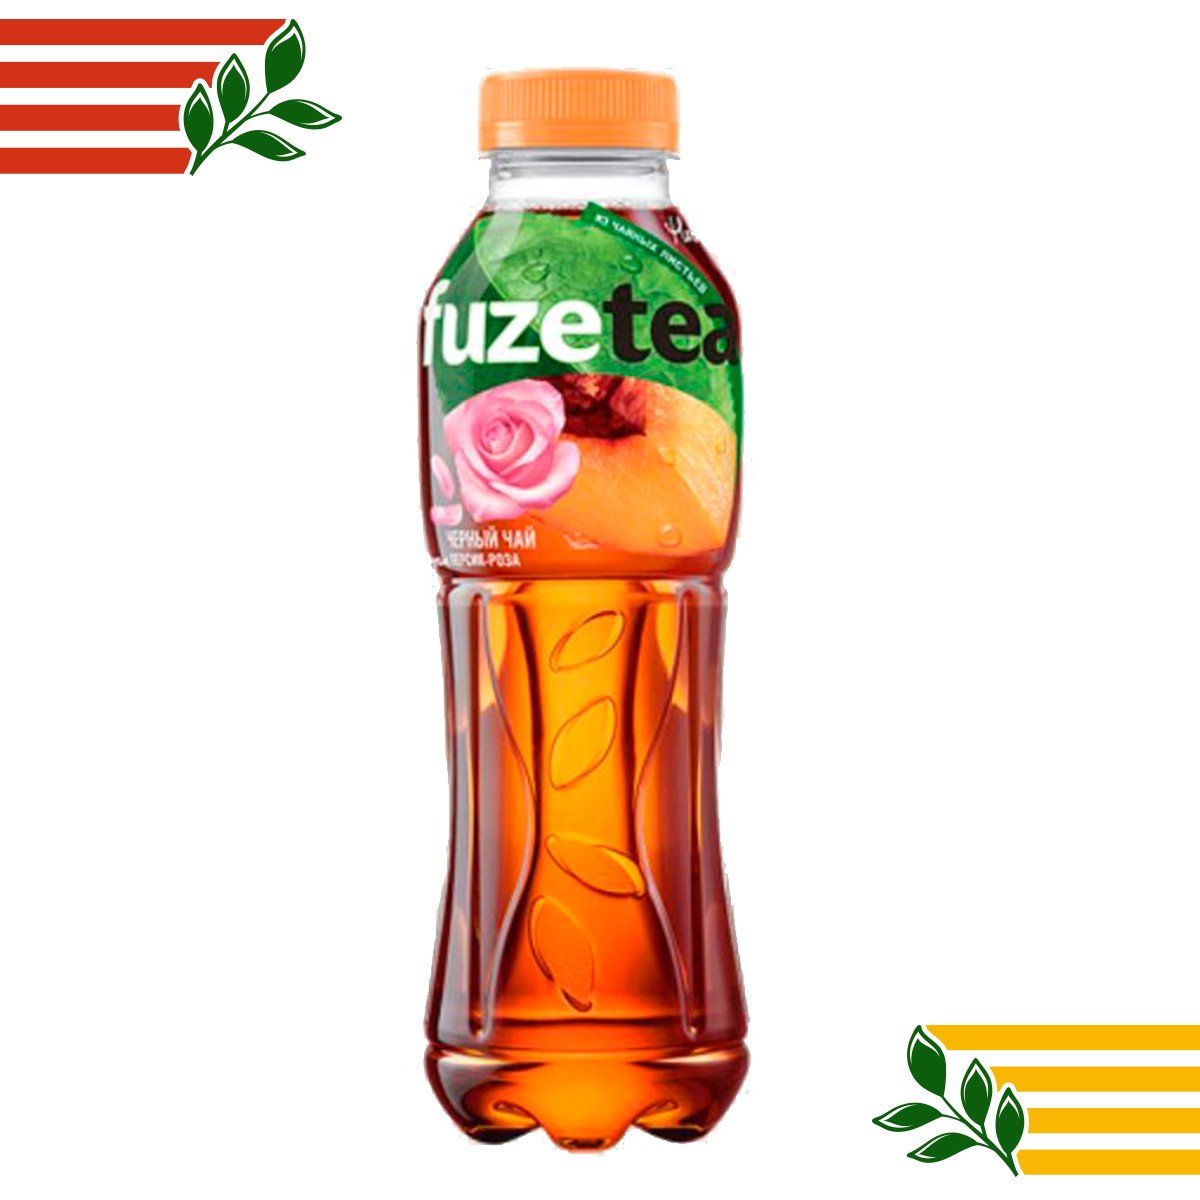 fuze-tea-wild-peach-05-l